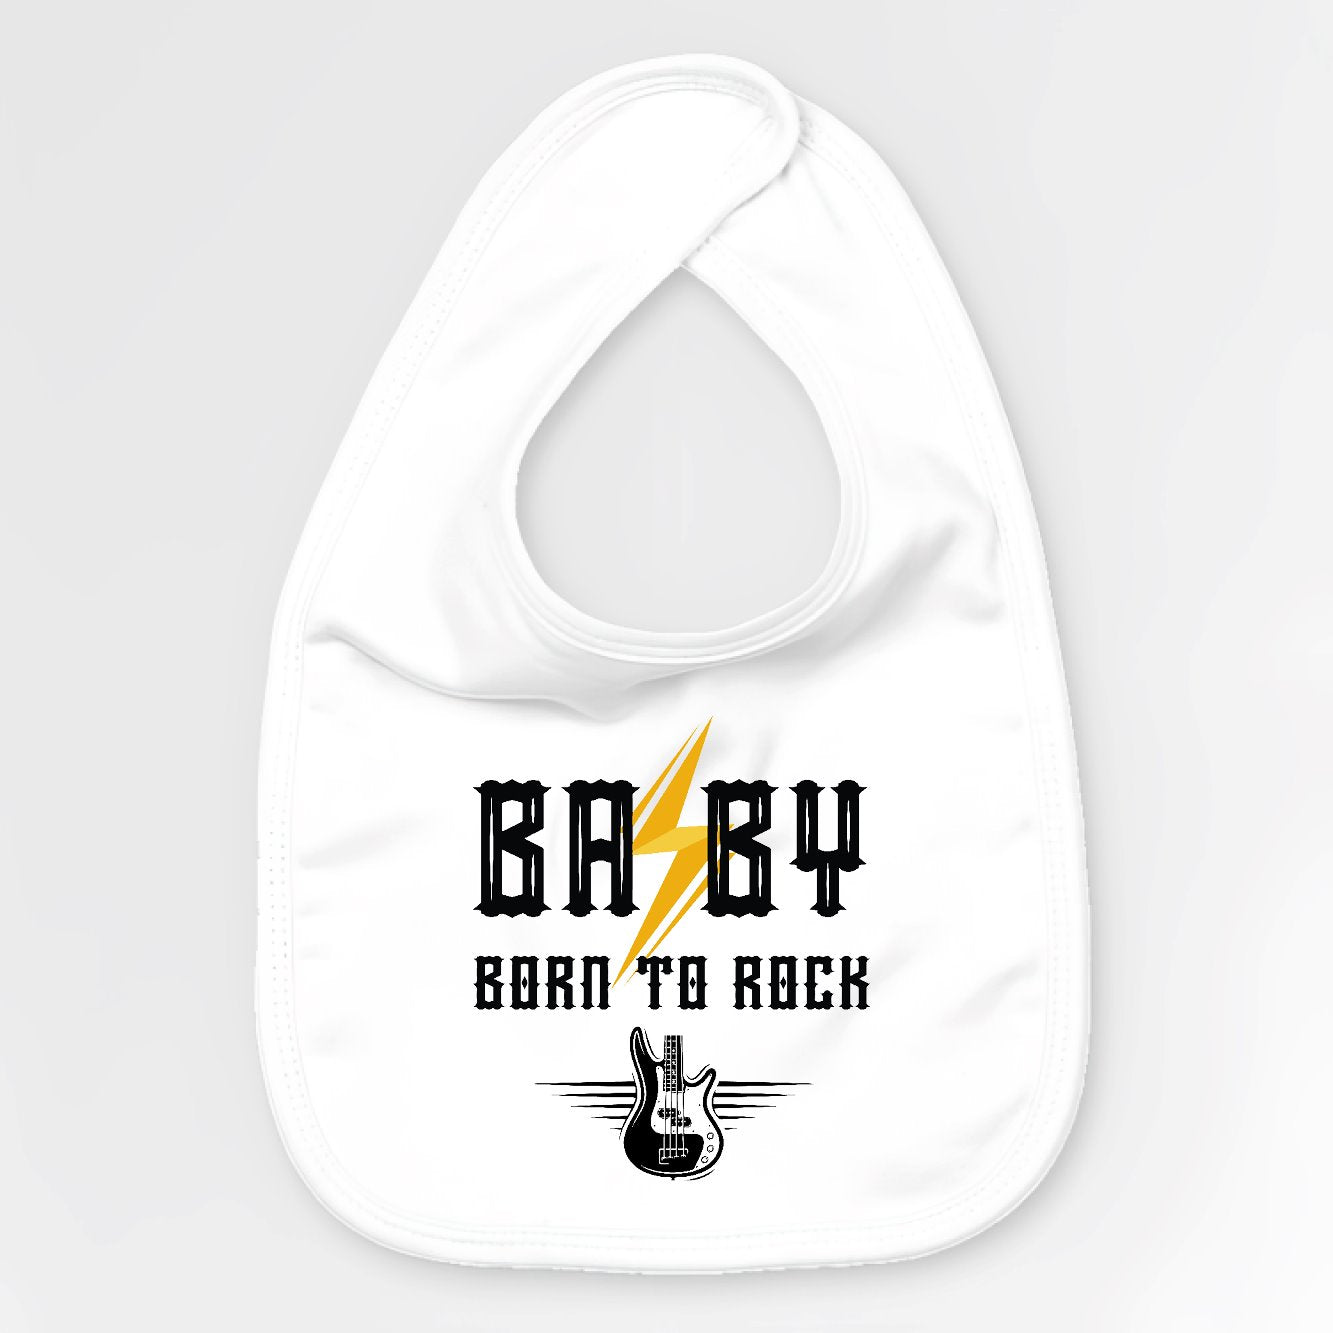 Bavoir Bébé Baby born to rock Blanc